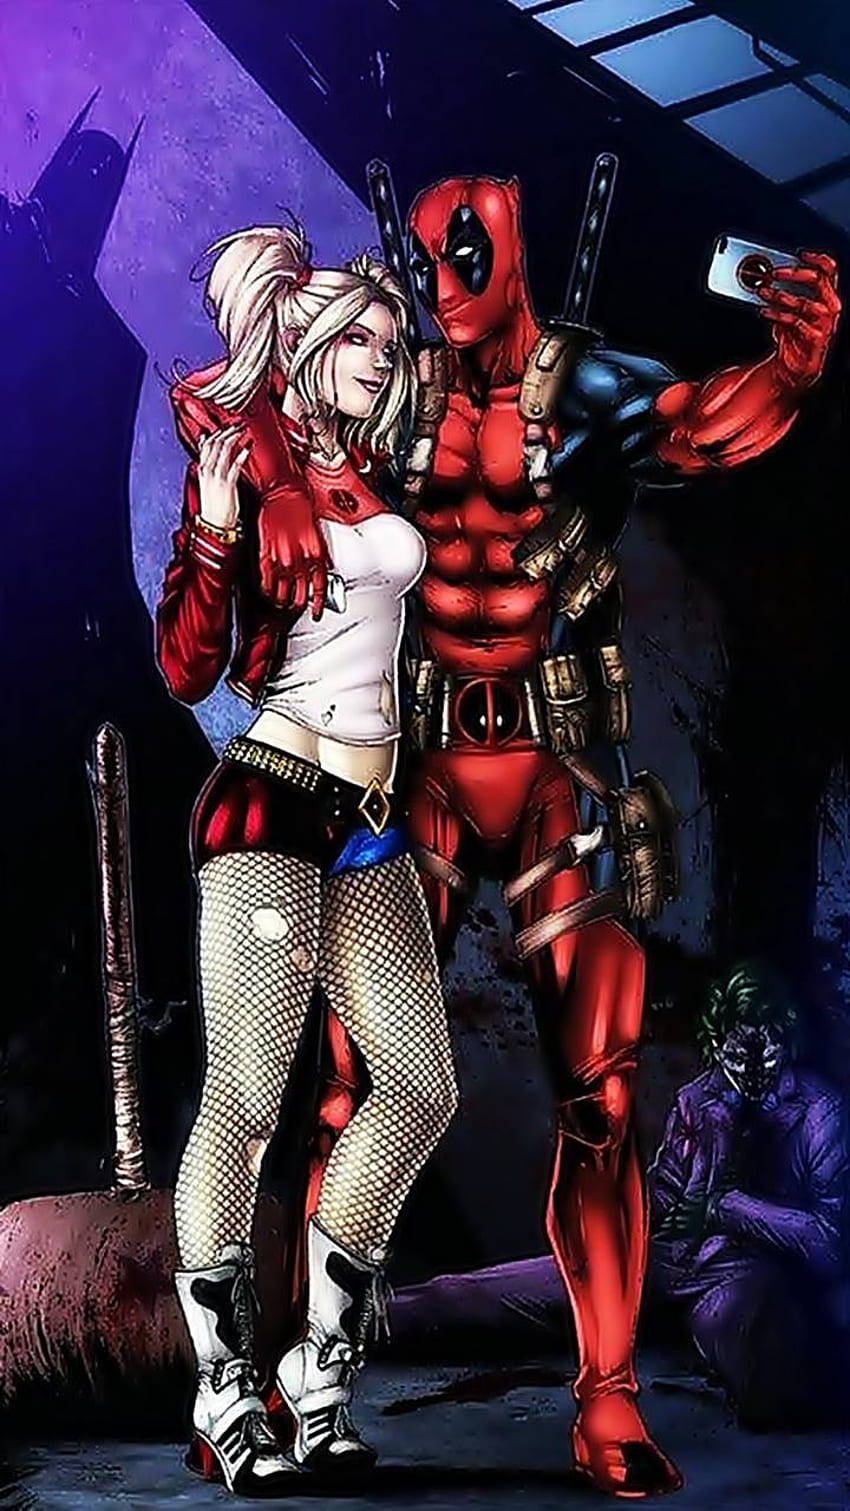 Deadpool Harley Quinn Fanfiction Poster Digital Prints Arte y coleccionables dalasmaker.se fondo de pantalla del teléfono